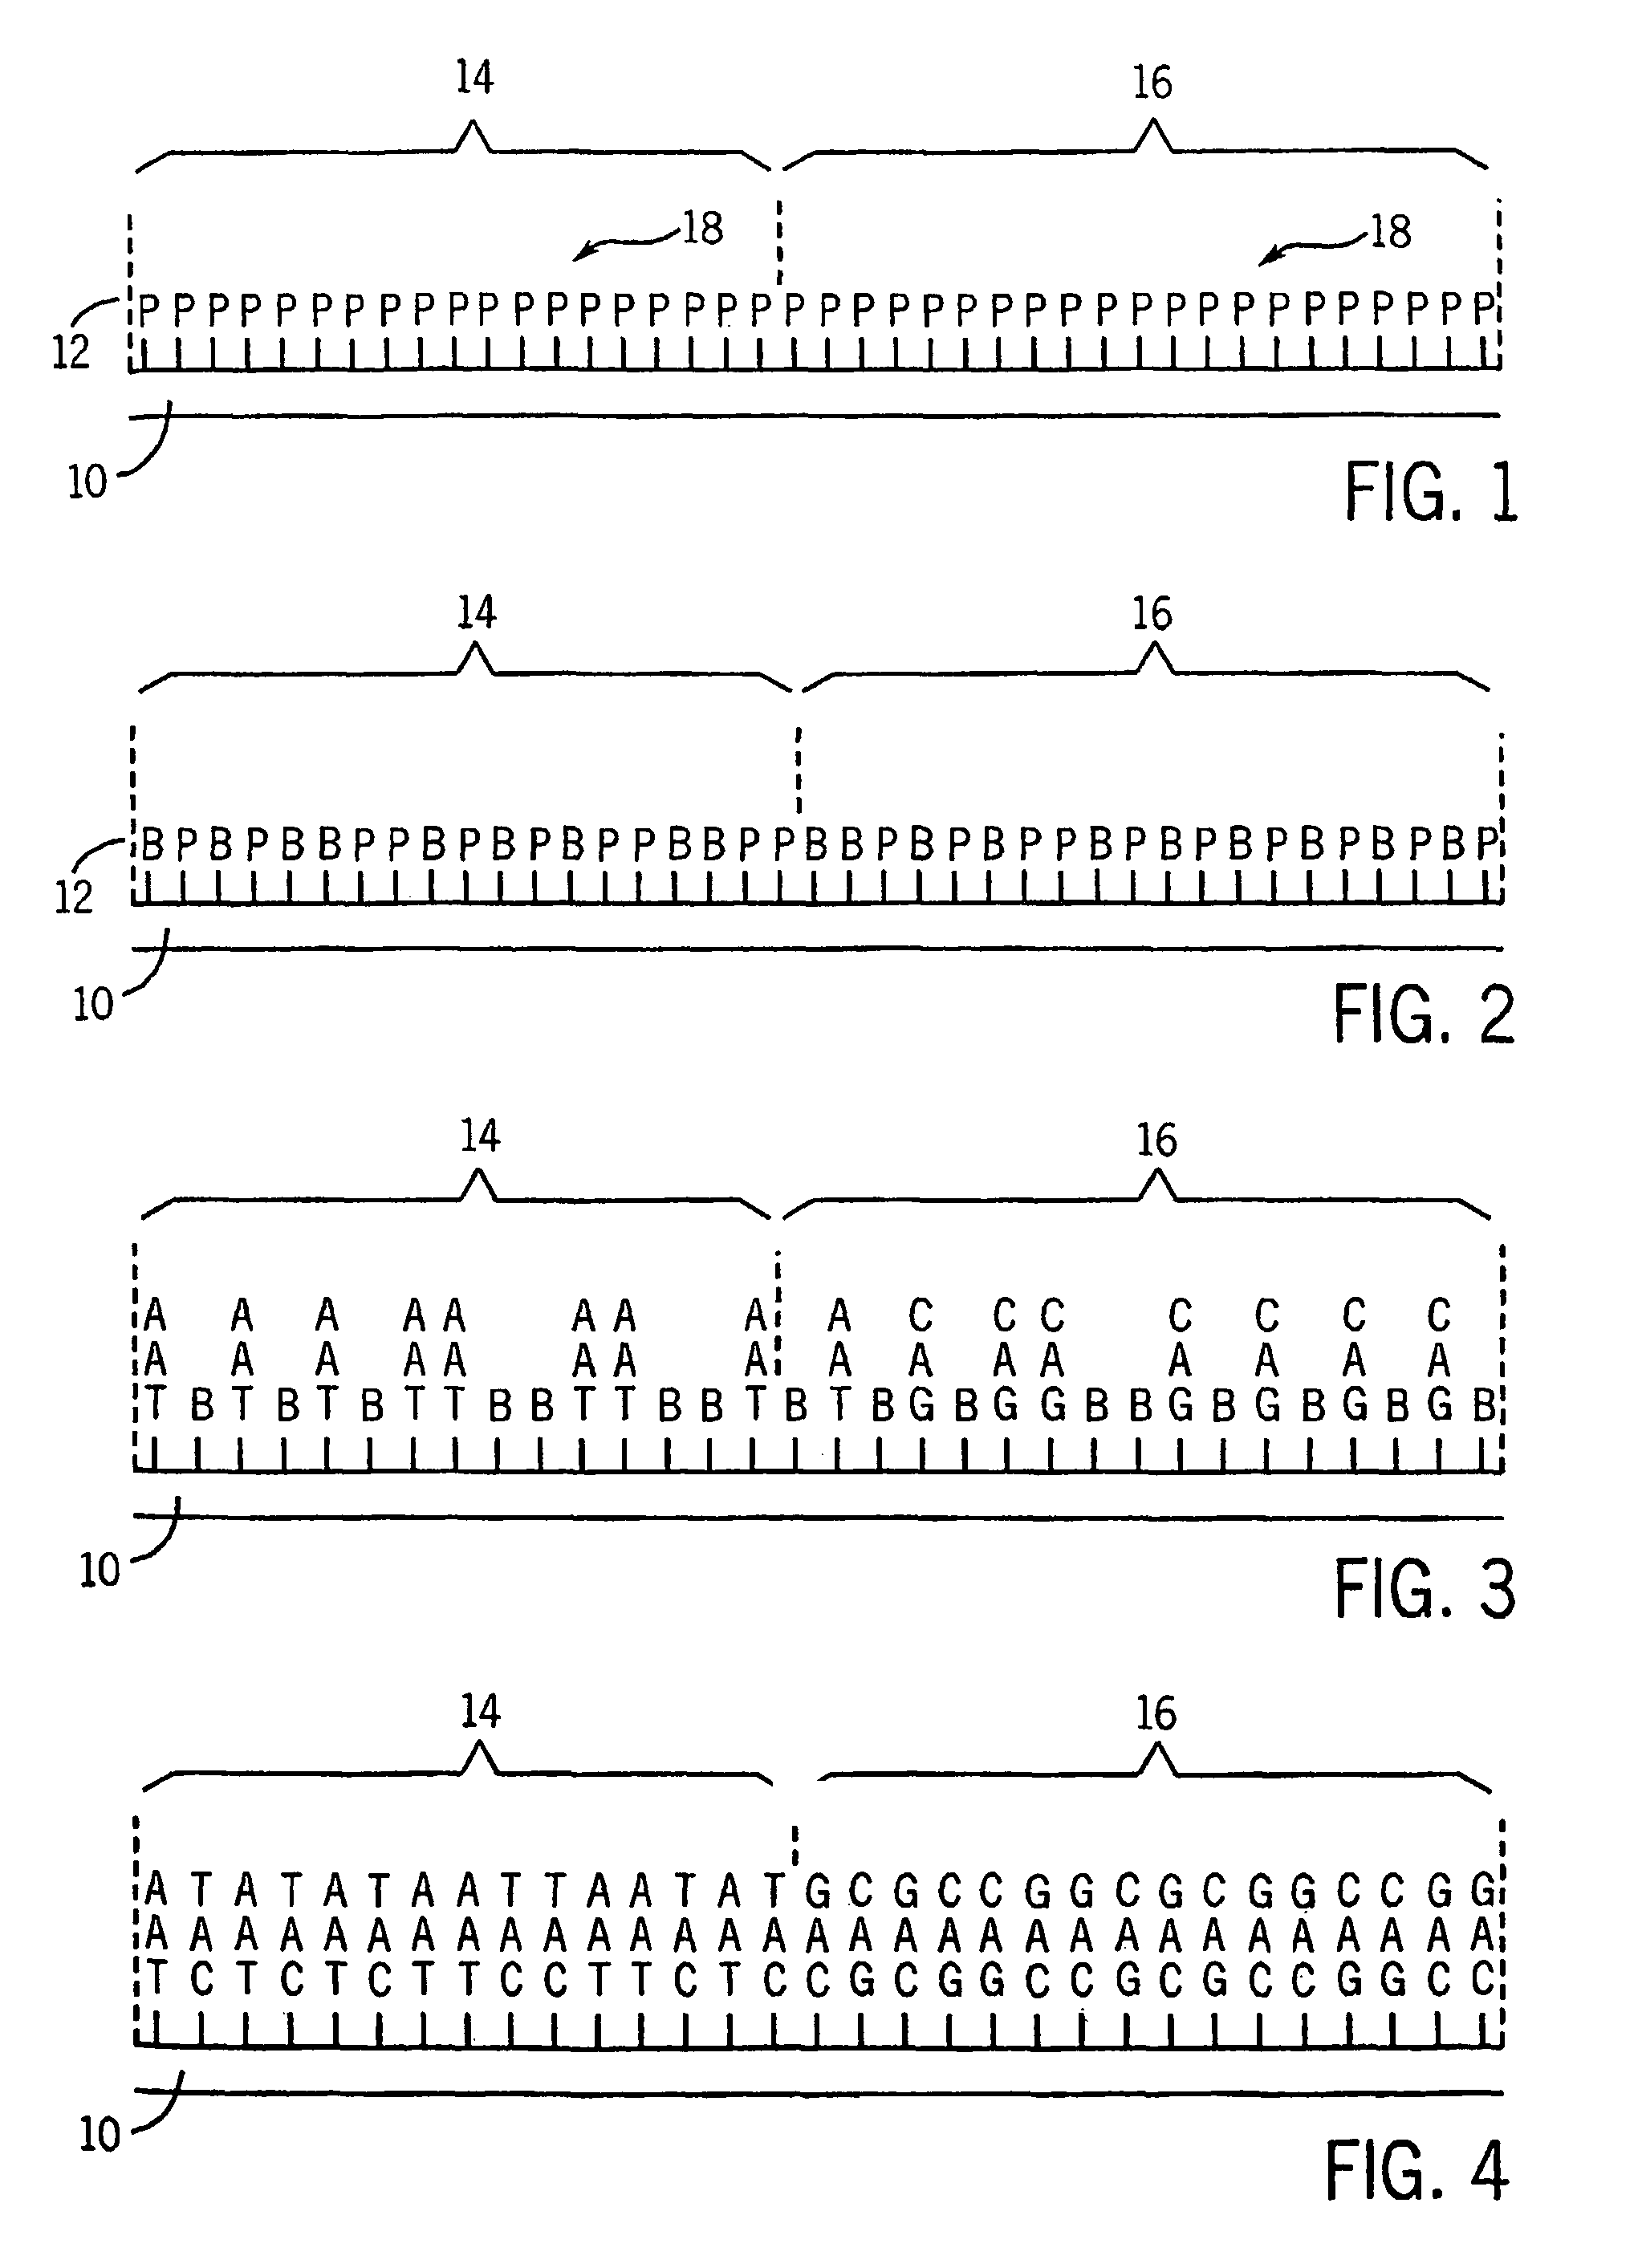 Microarrays having multiple oligonucleotides in single array features